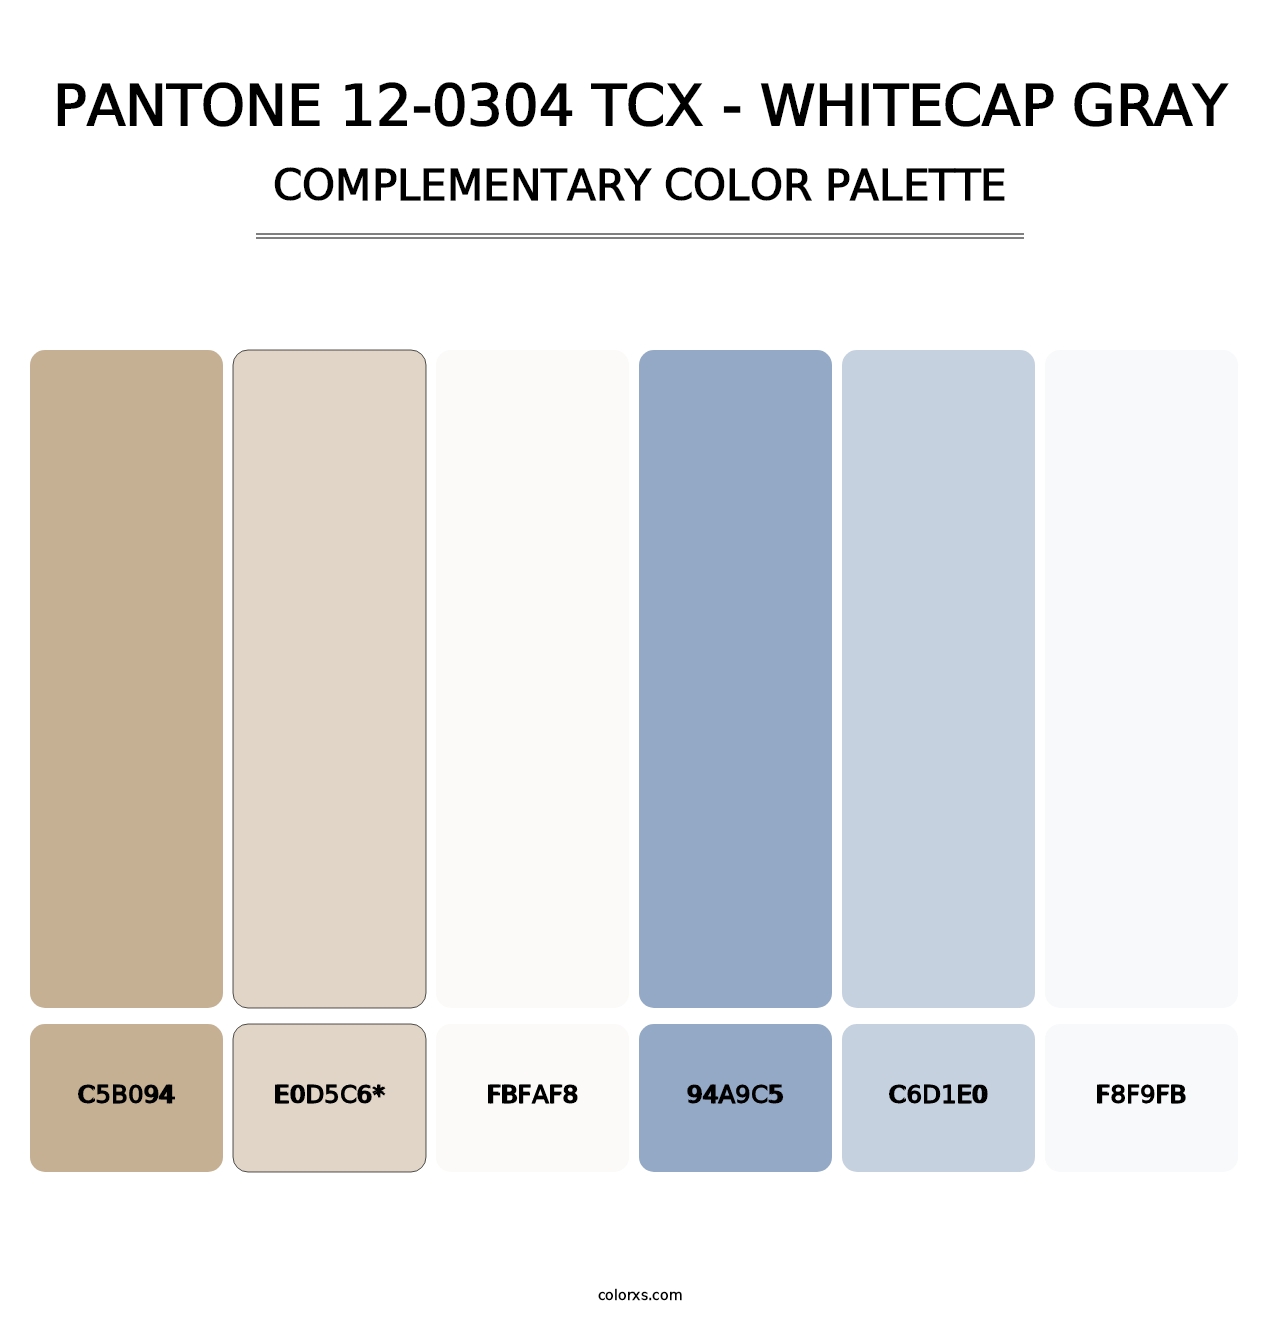 PANTONE 12-0304 TCX - Whitecap Gray - Complementary Color Palette